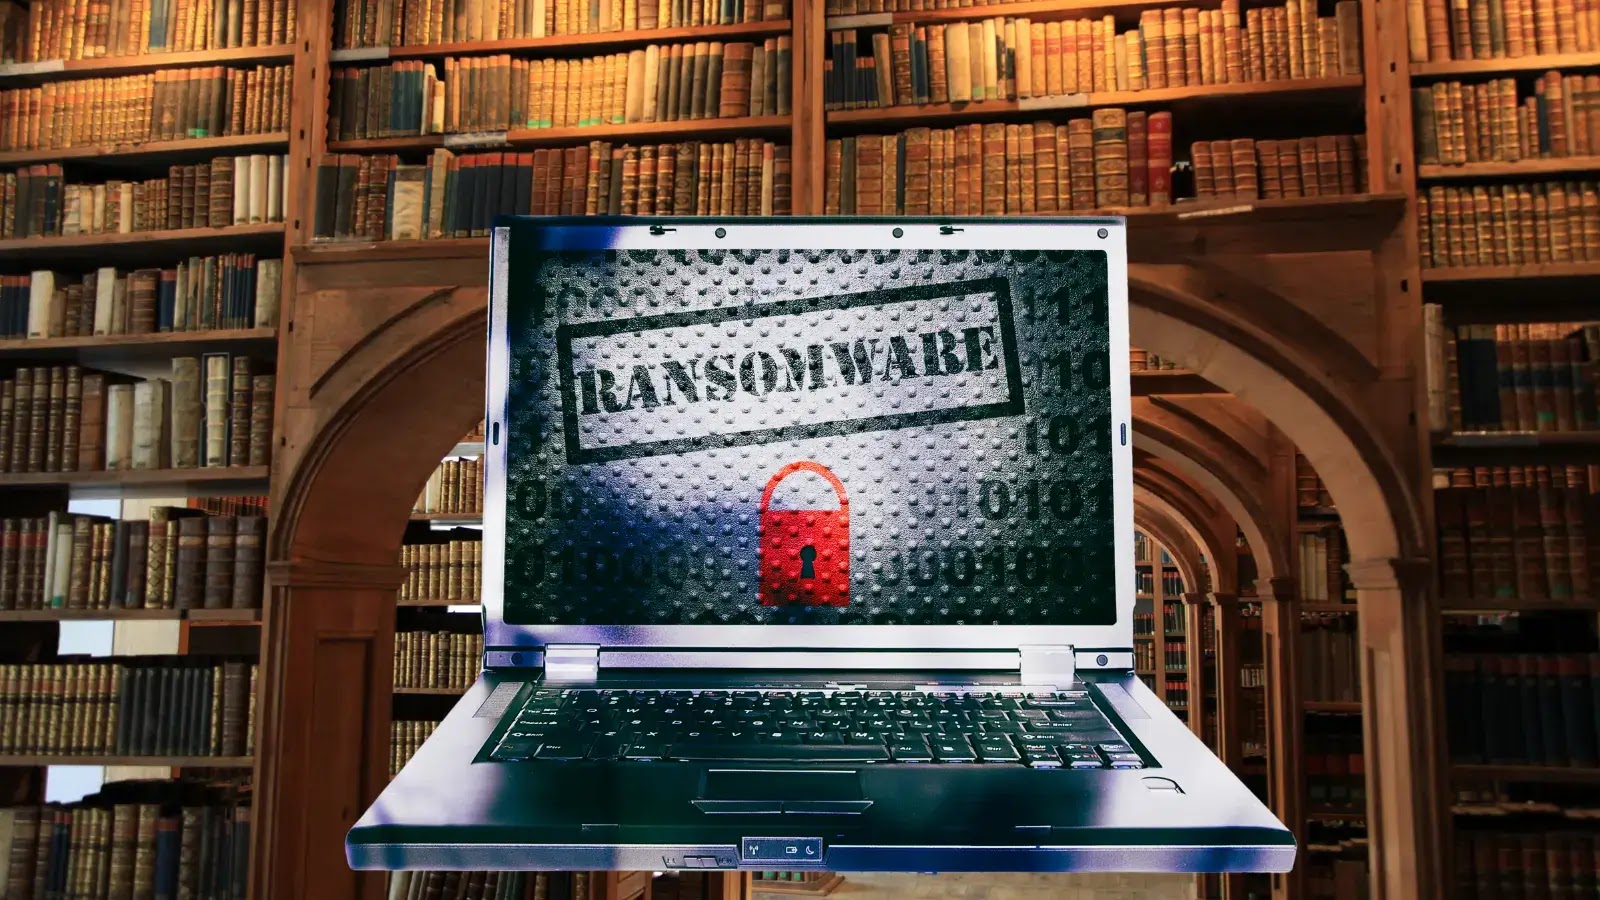 Seattle Public Library Website offline Following Ransomware Attack